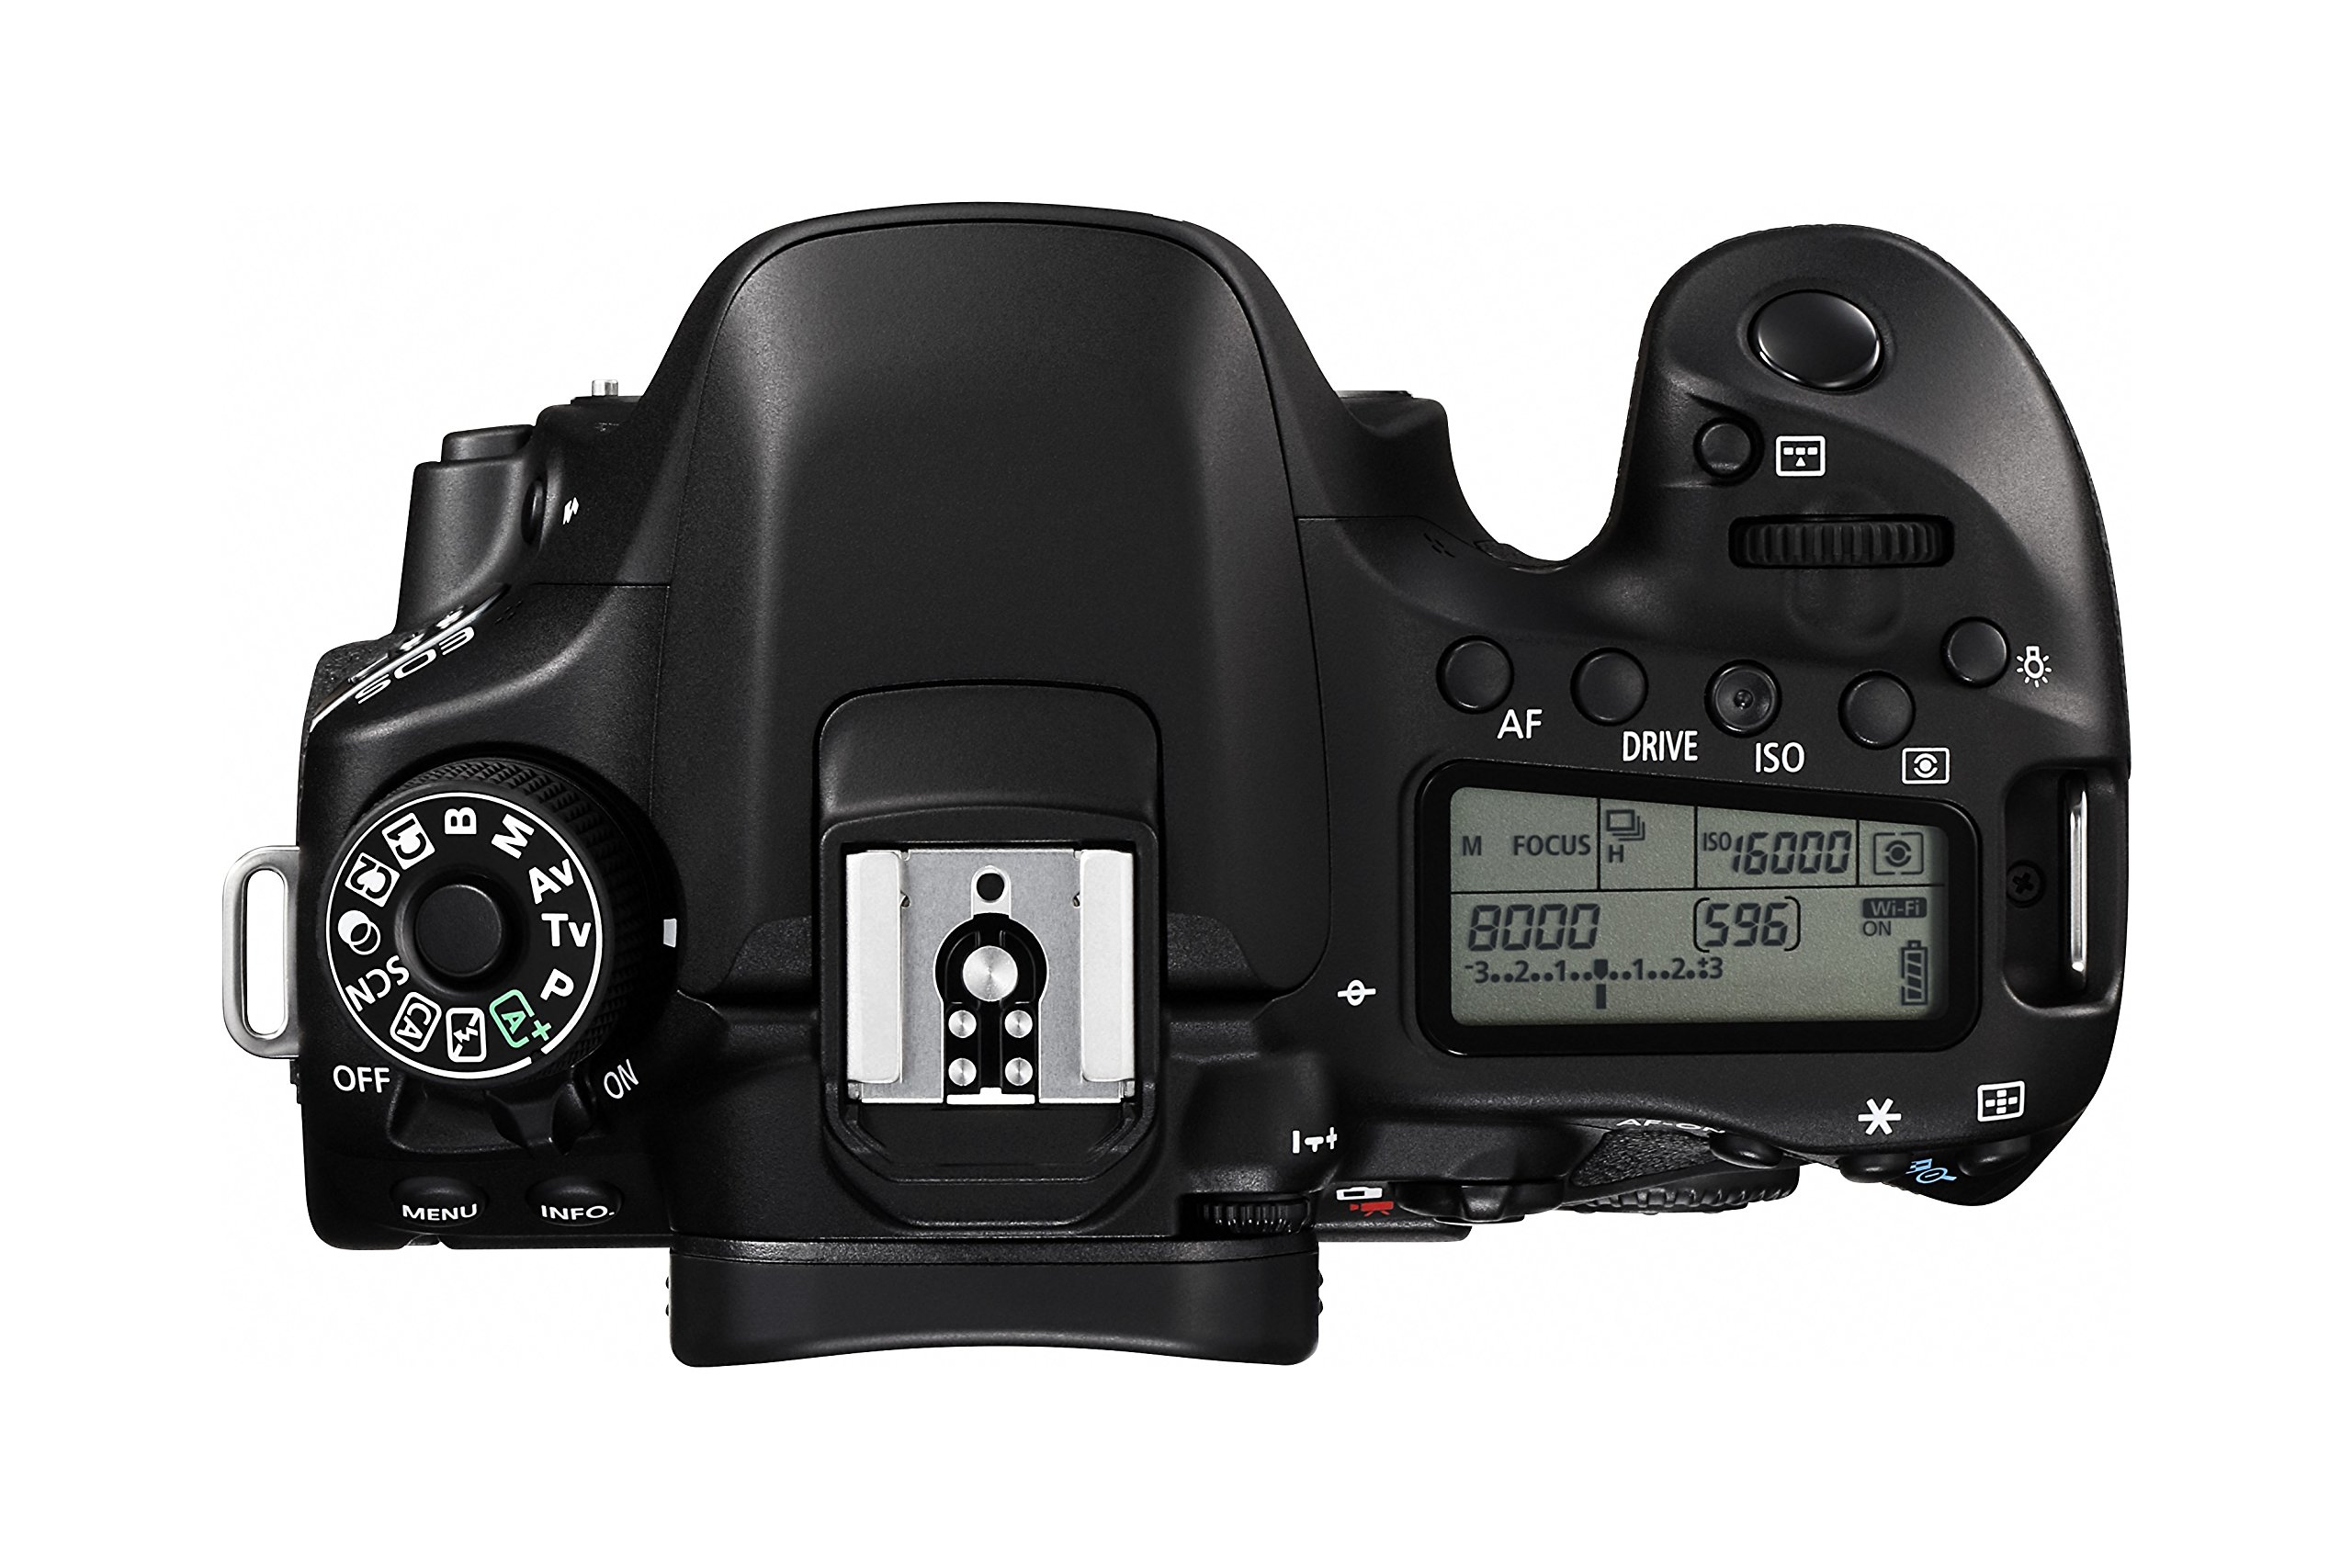 Canon Digital SLR Camera Body [EOS 80D] with 24.2 Megapixel (APS-C) CMOS Sensor and Dual Pixel CMOS AF - Black